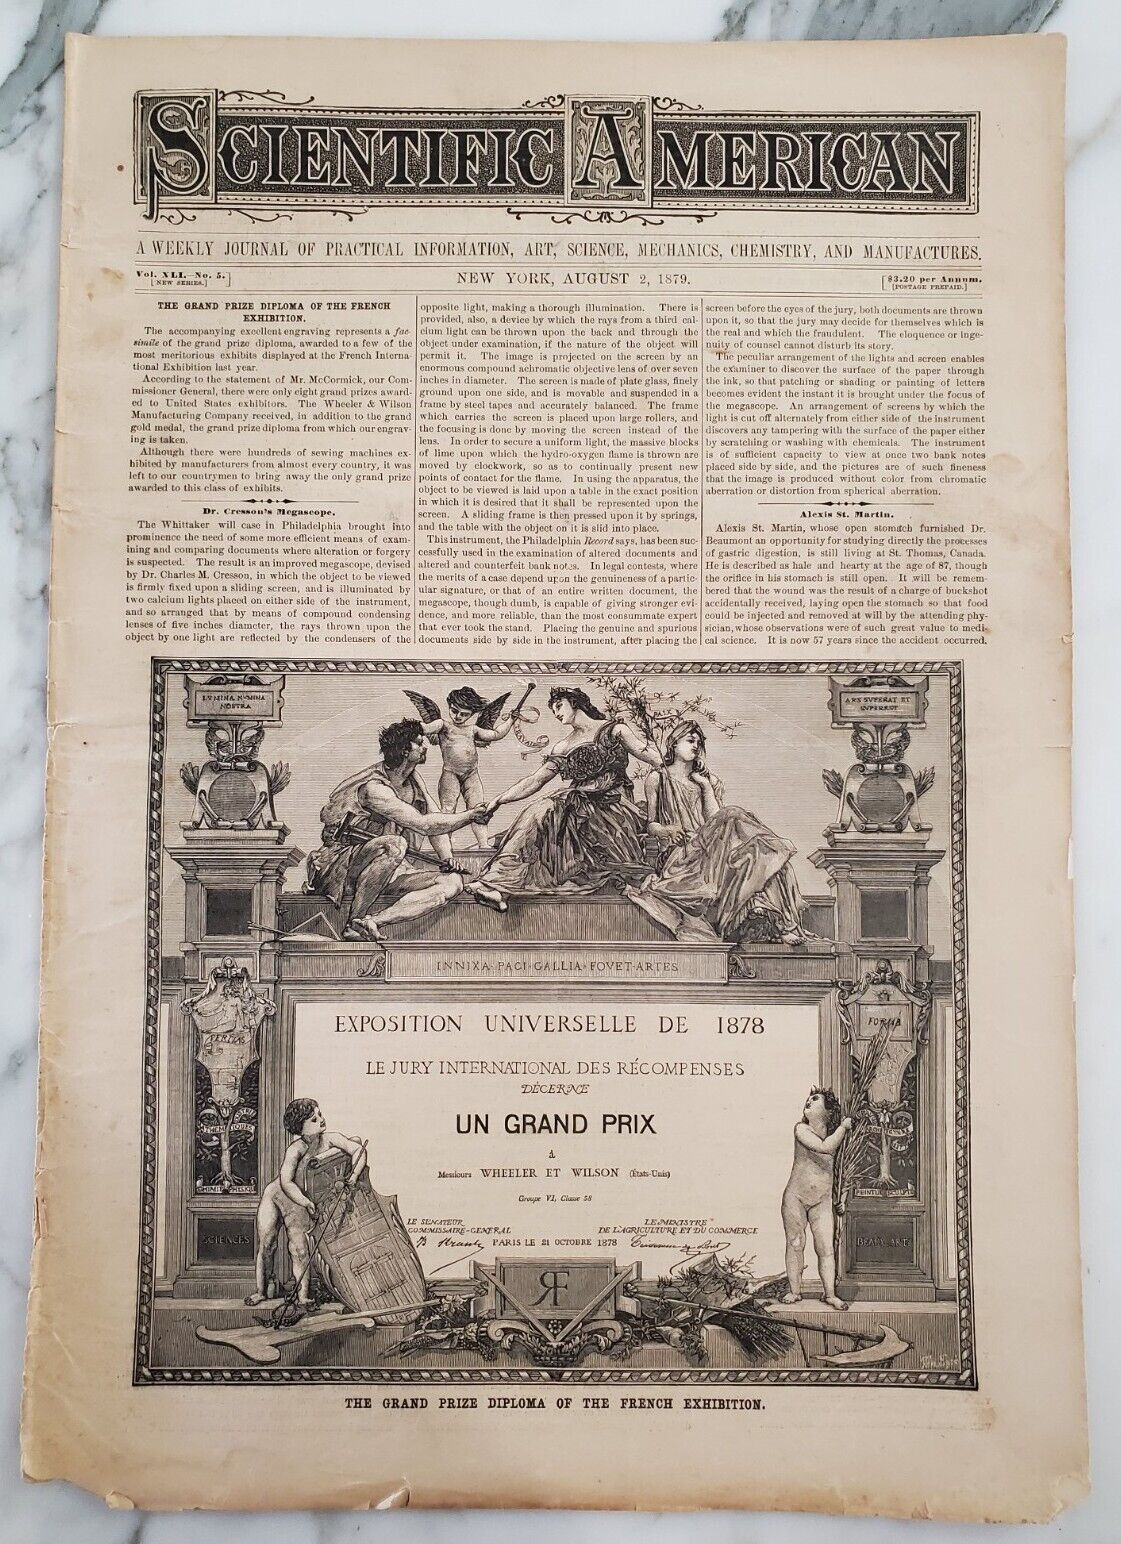 1879 SCIENTIFIC AMERICAN Journal/Magazine August 2 Issue Inventions Original